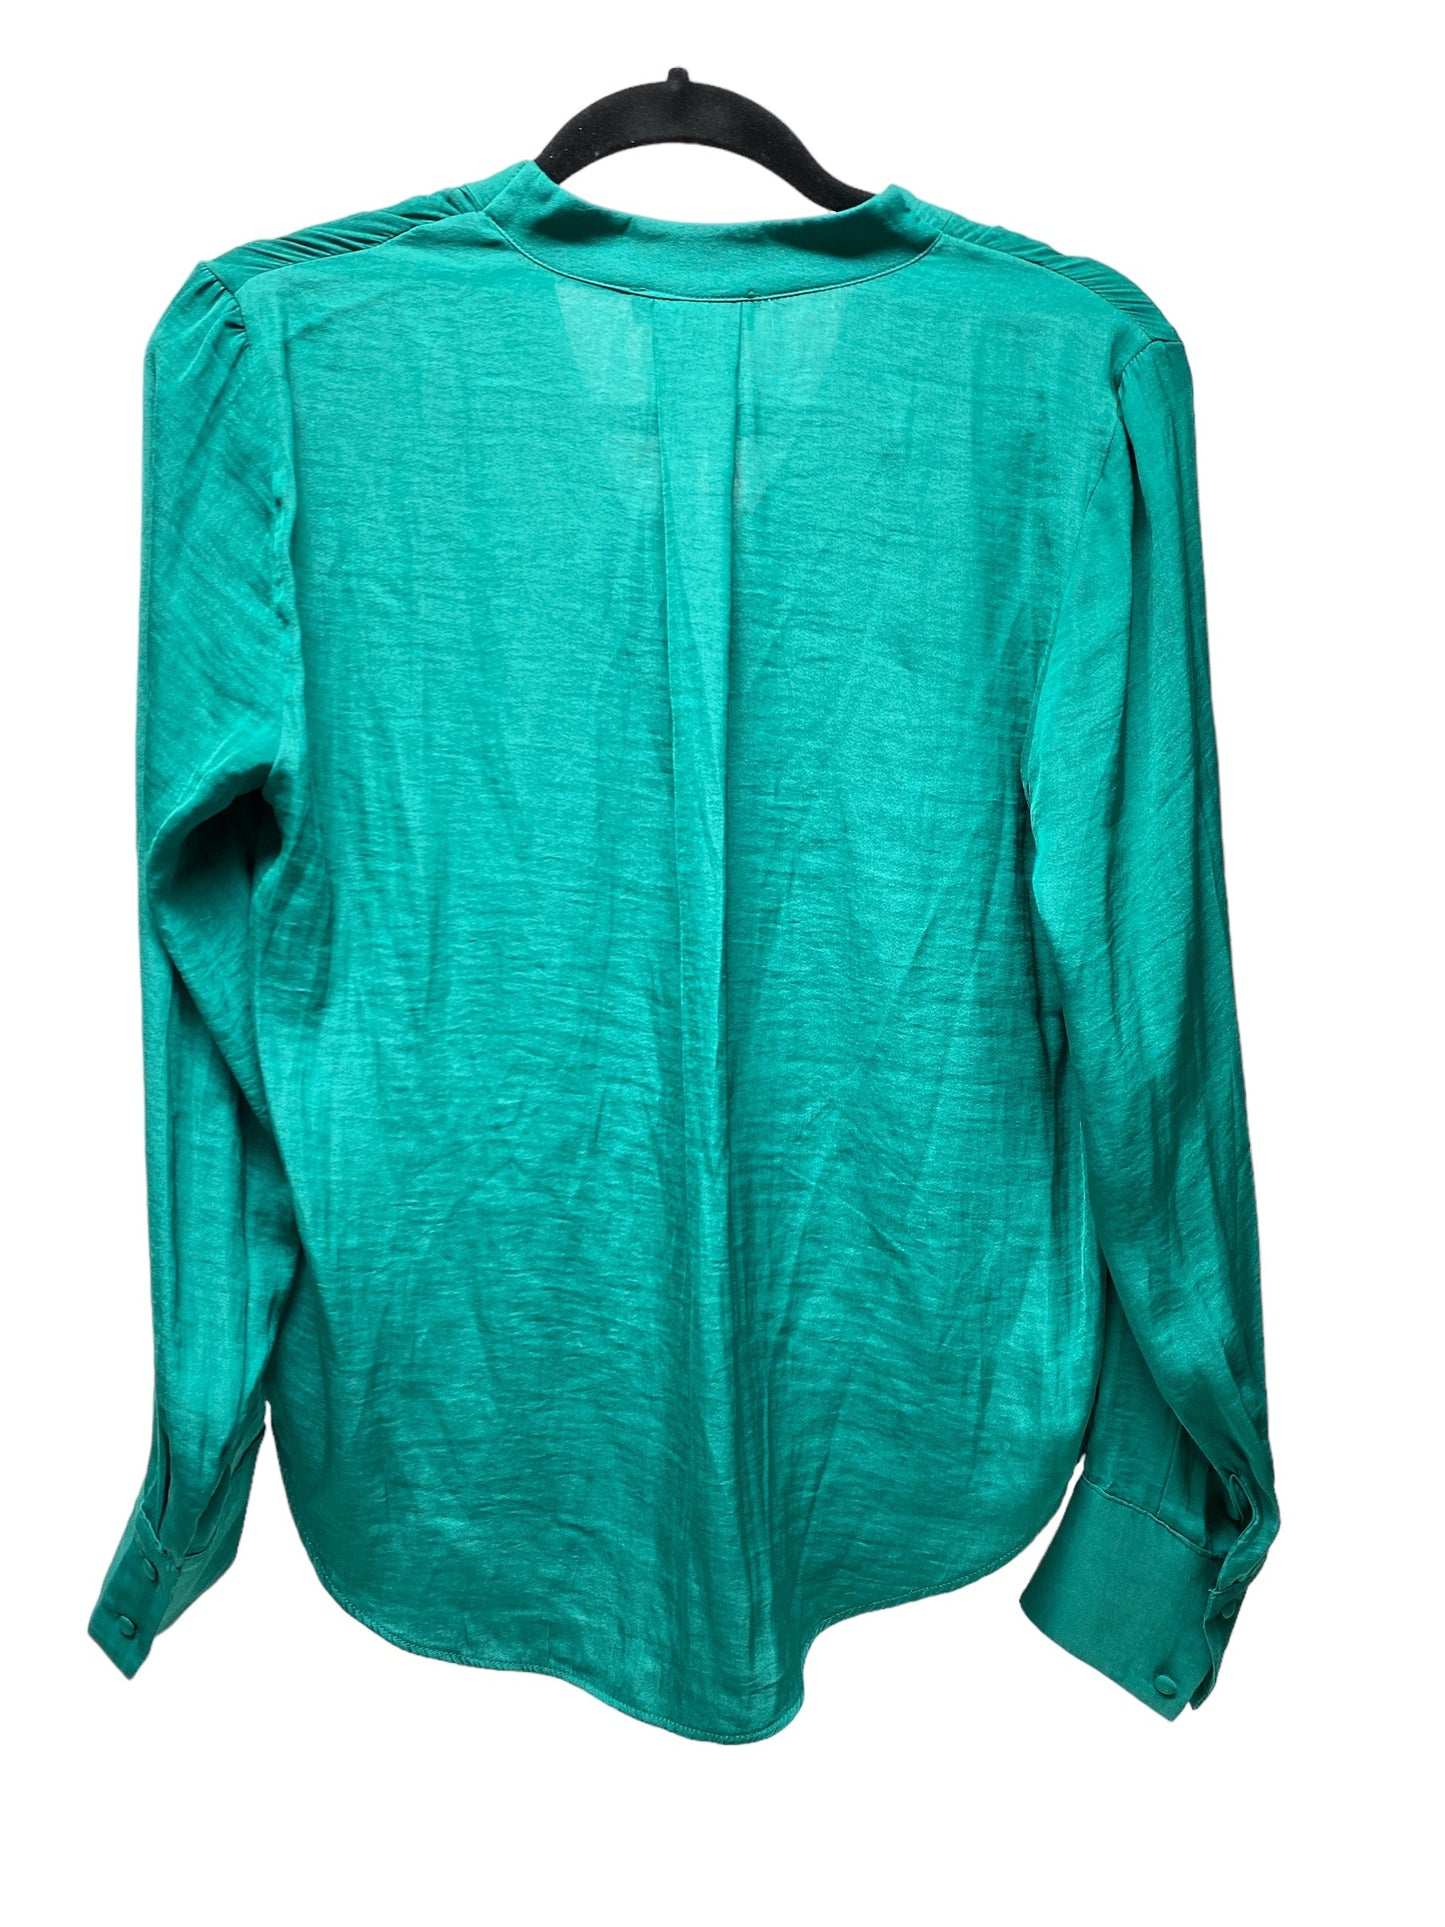 Green Top Long Sleeve Rachel Roy, Size S